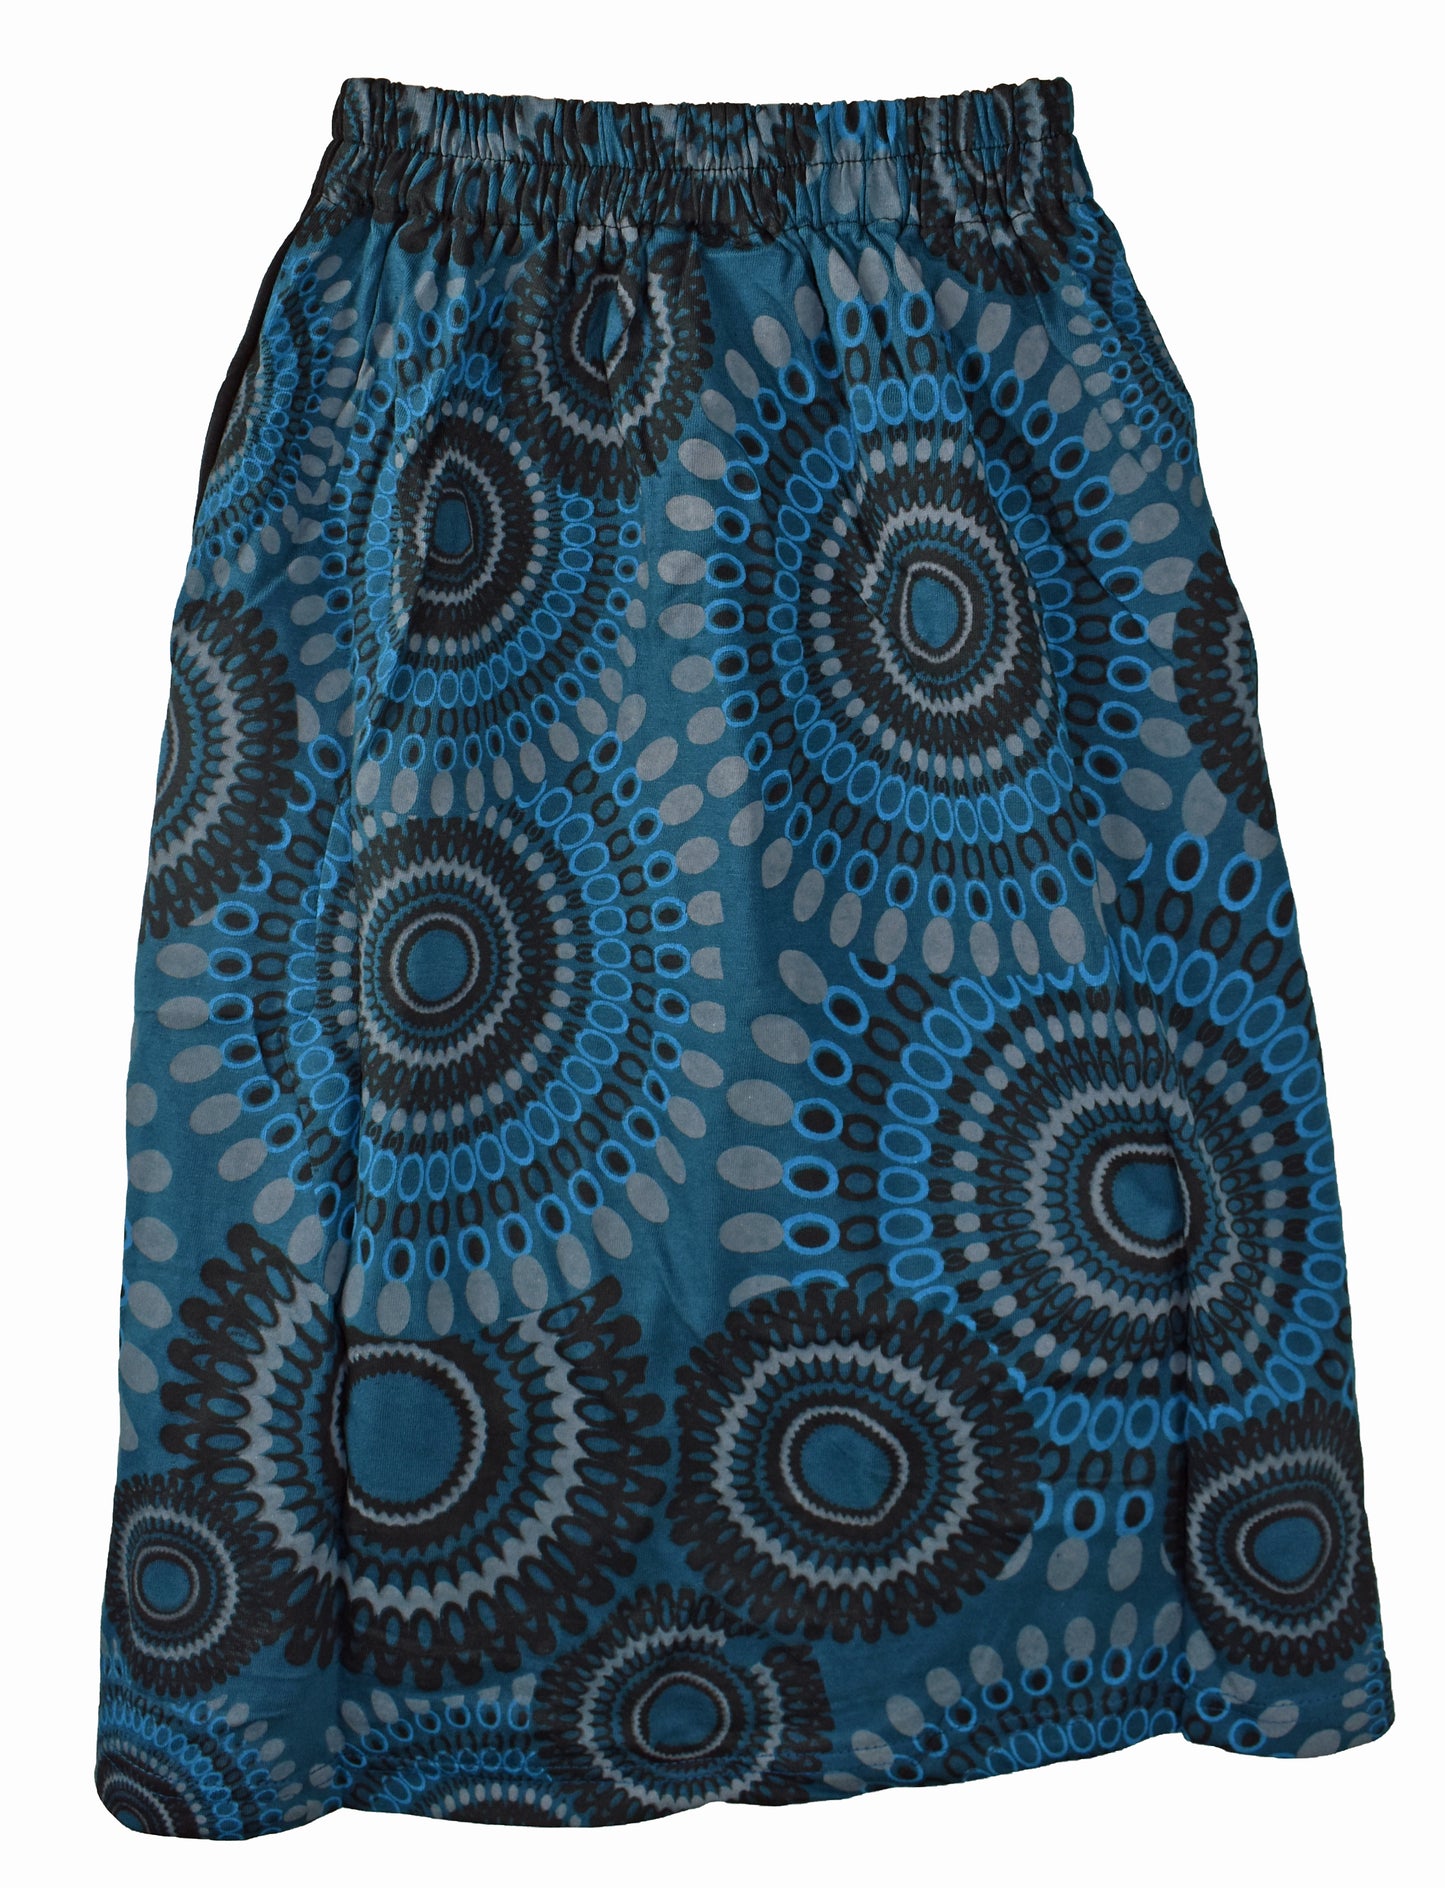 Mandala Print Cotton Skirt